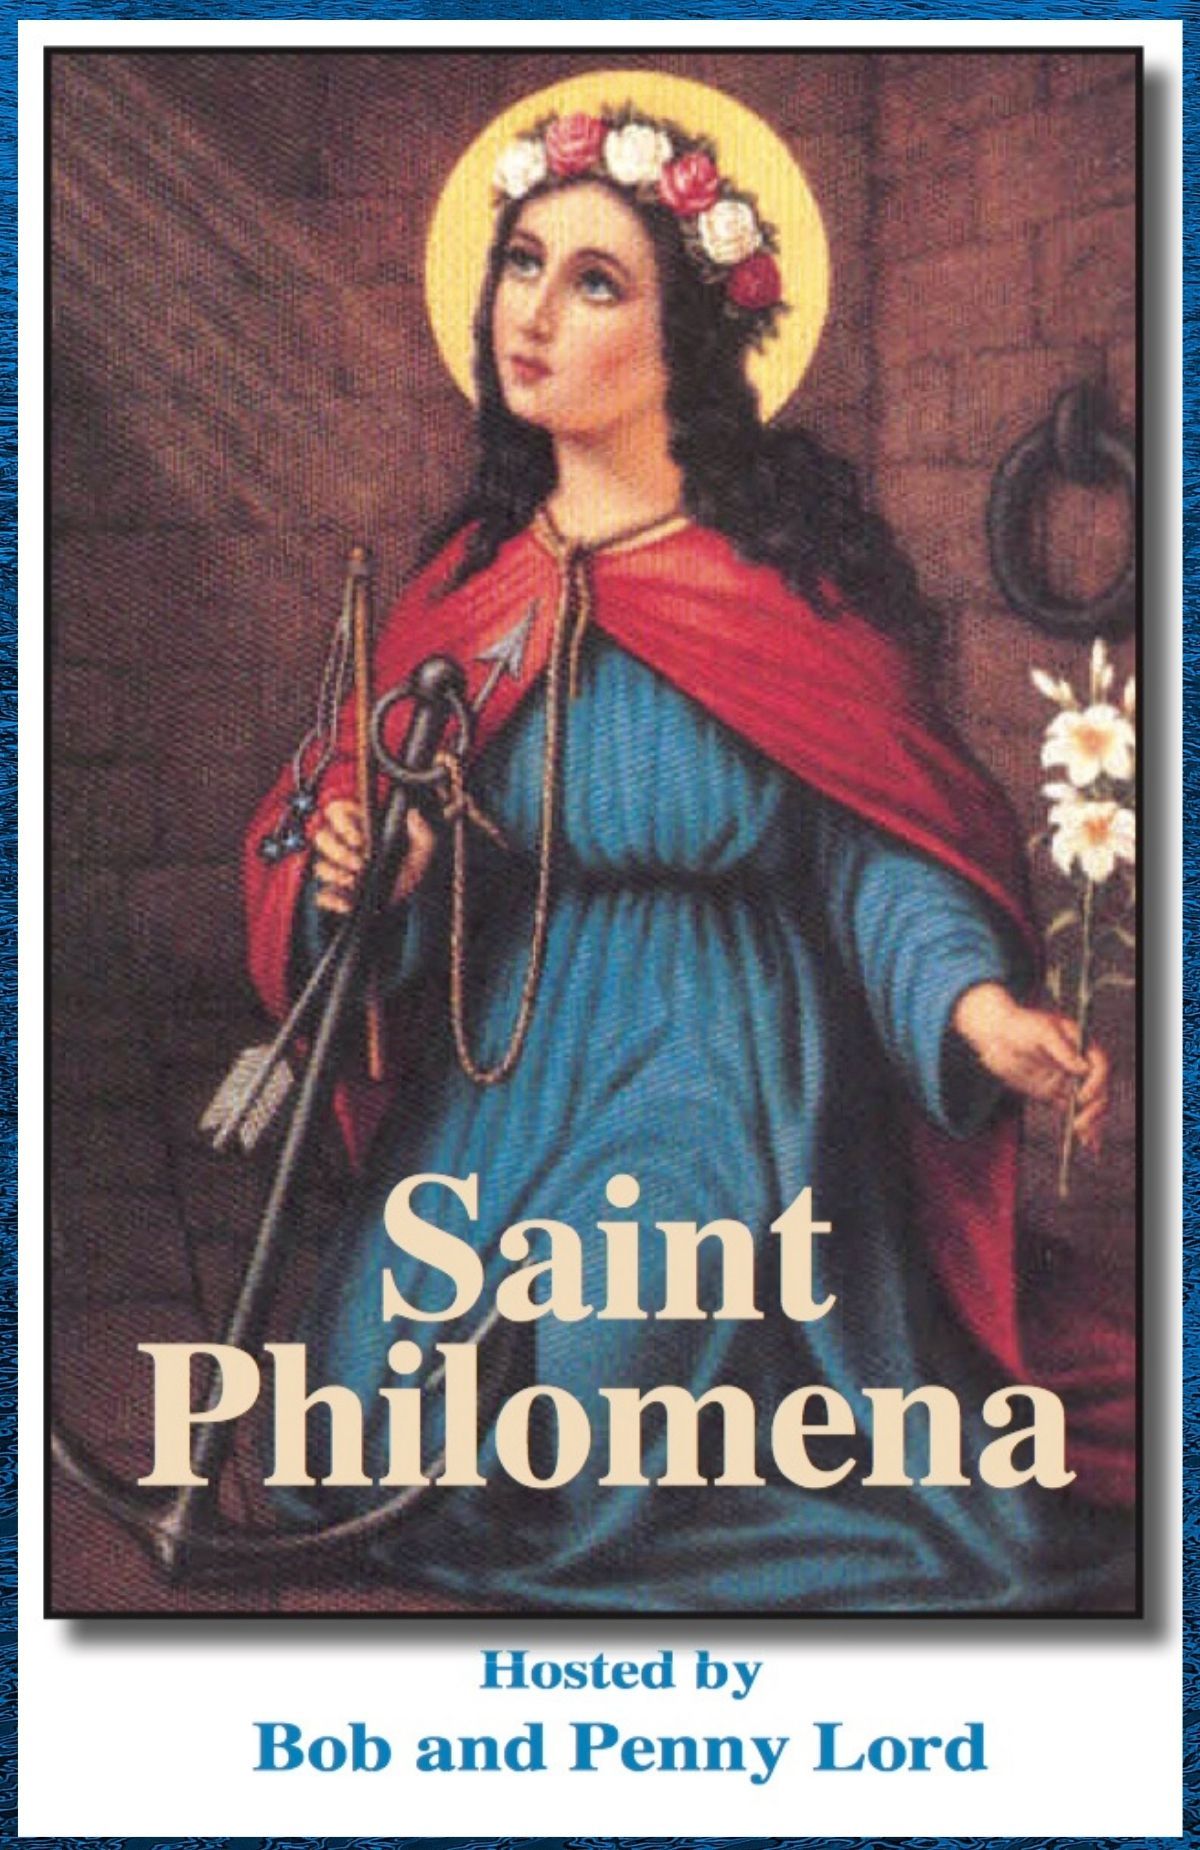 Saint Philomena DVD - Bob and Penny Lord